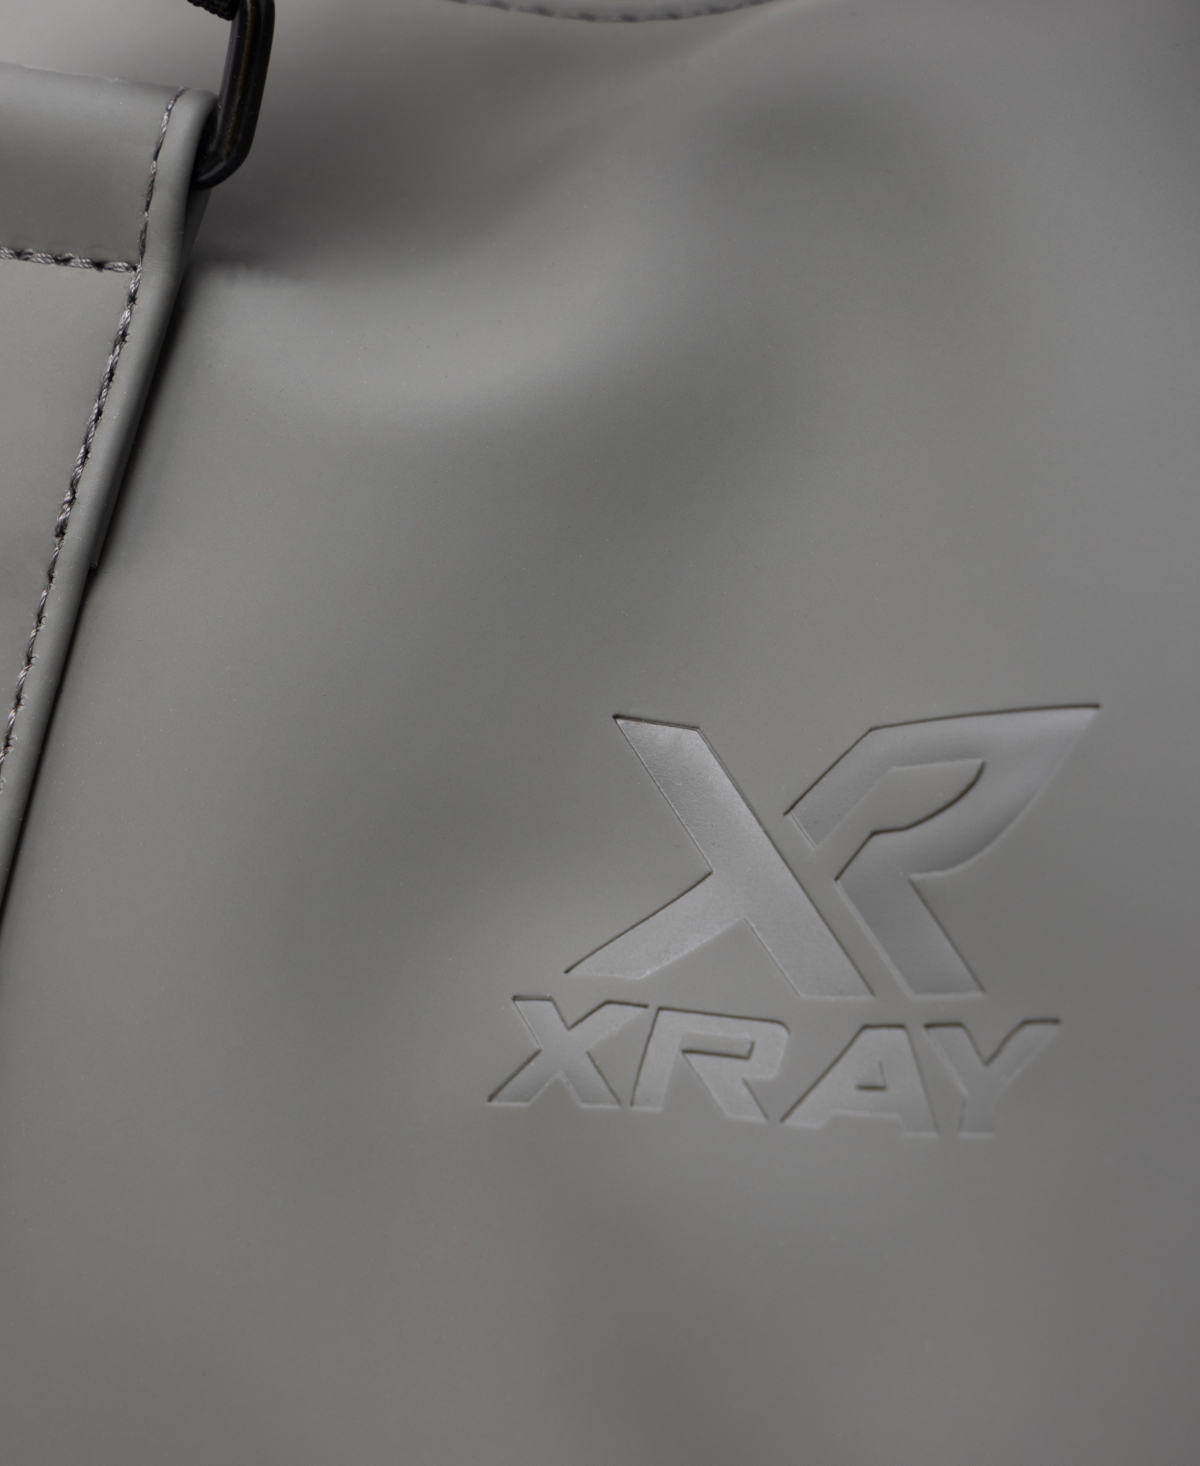 Shop X-ray Waterproof Travel Duffel Bag In Slate